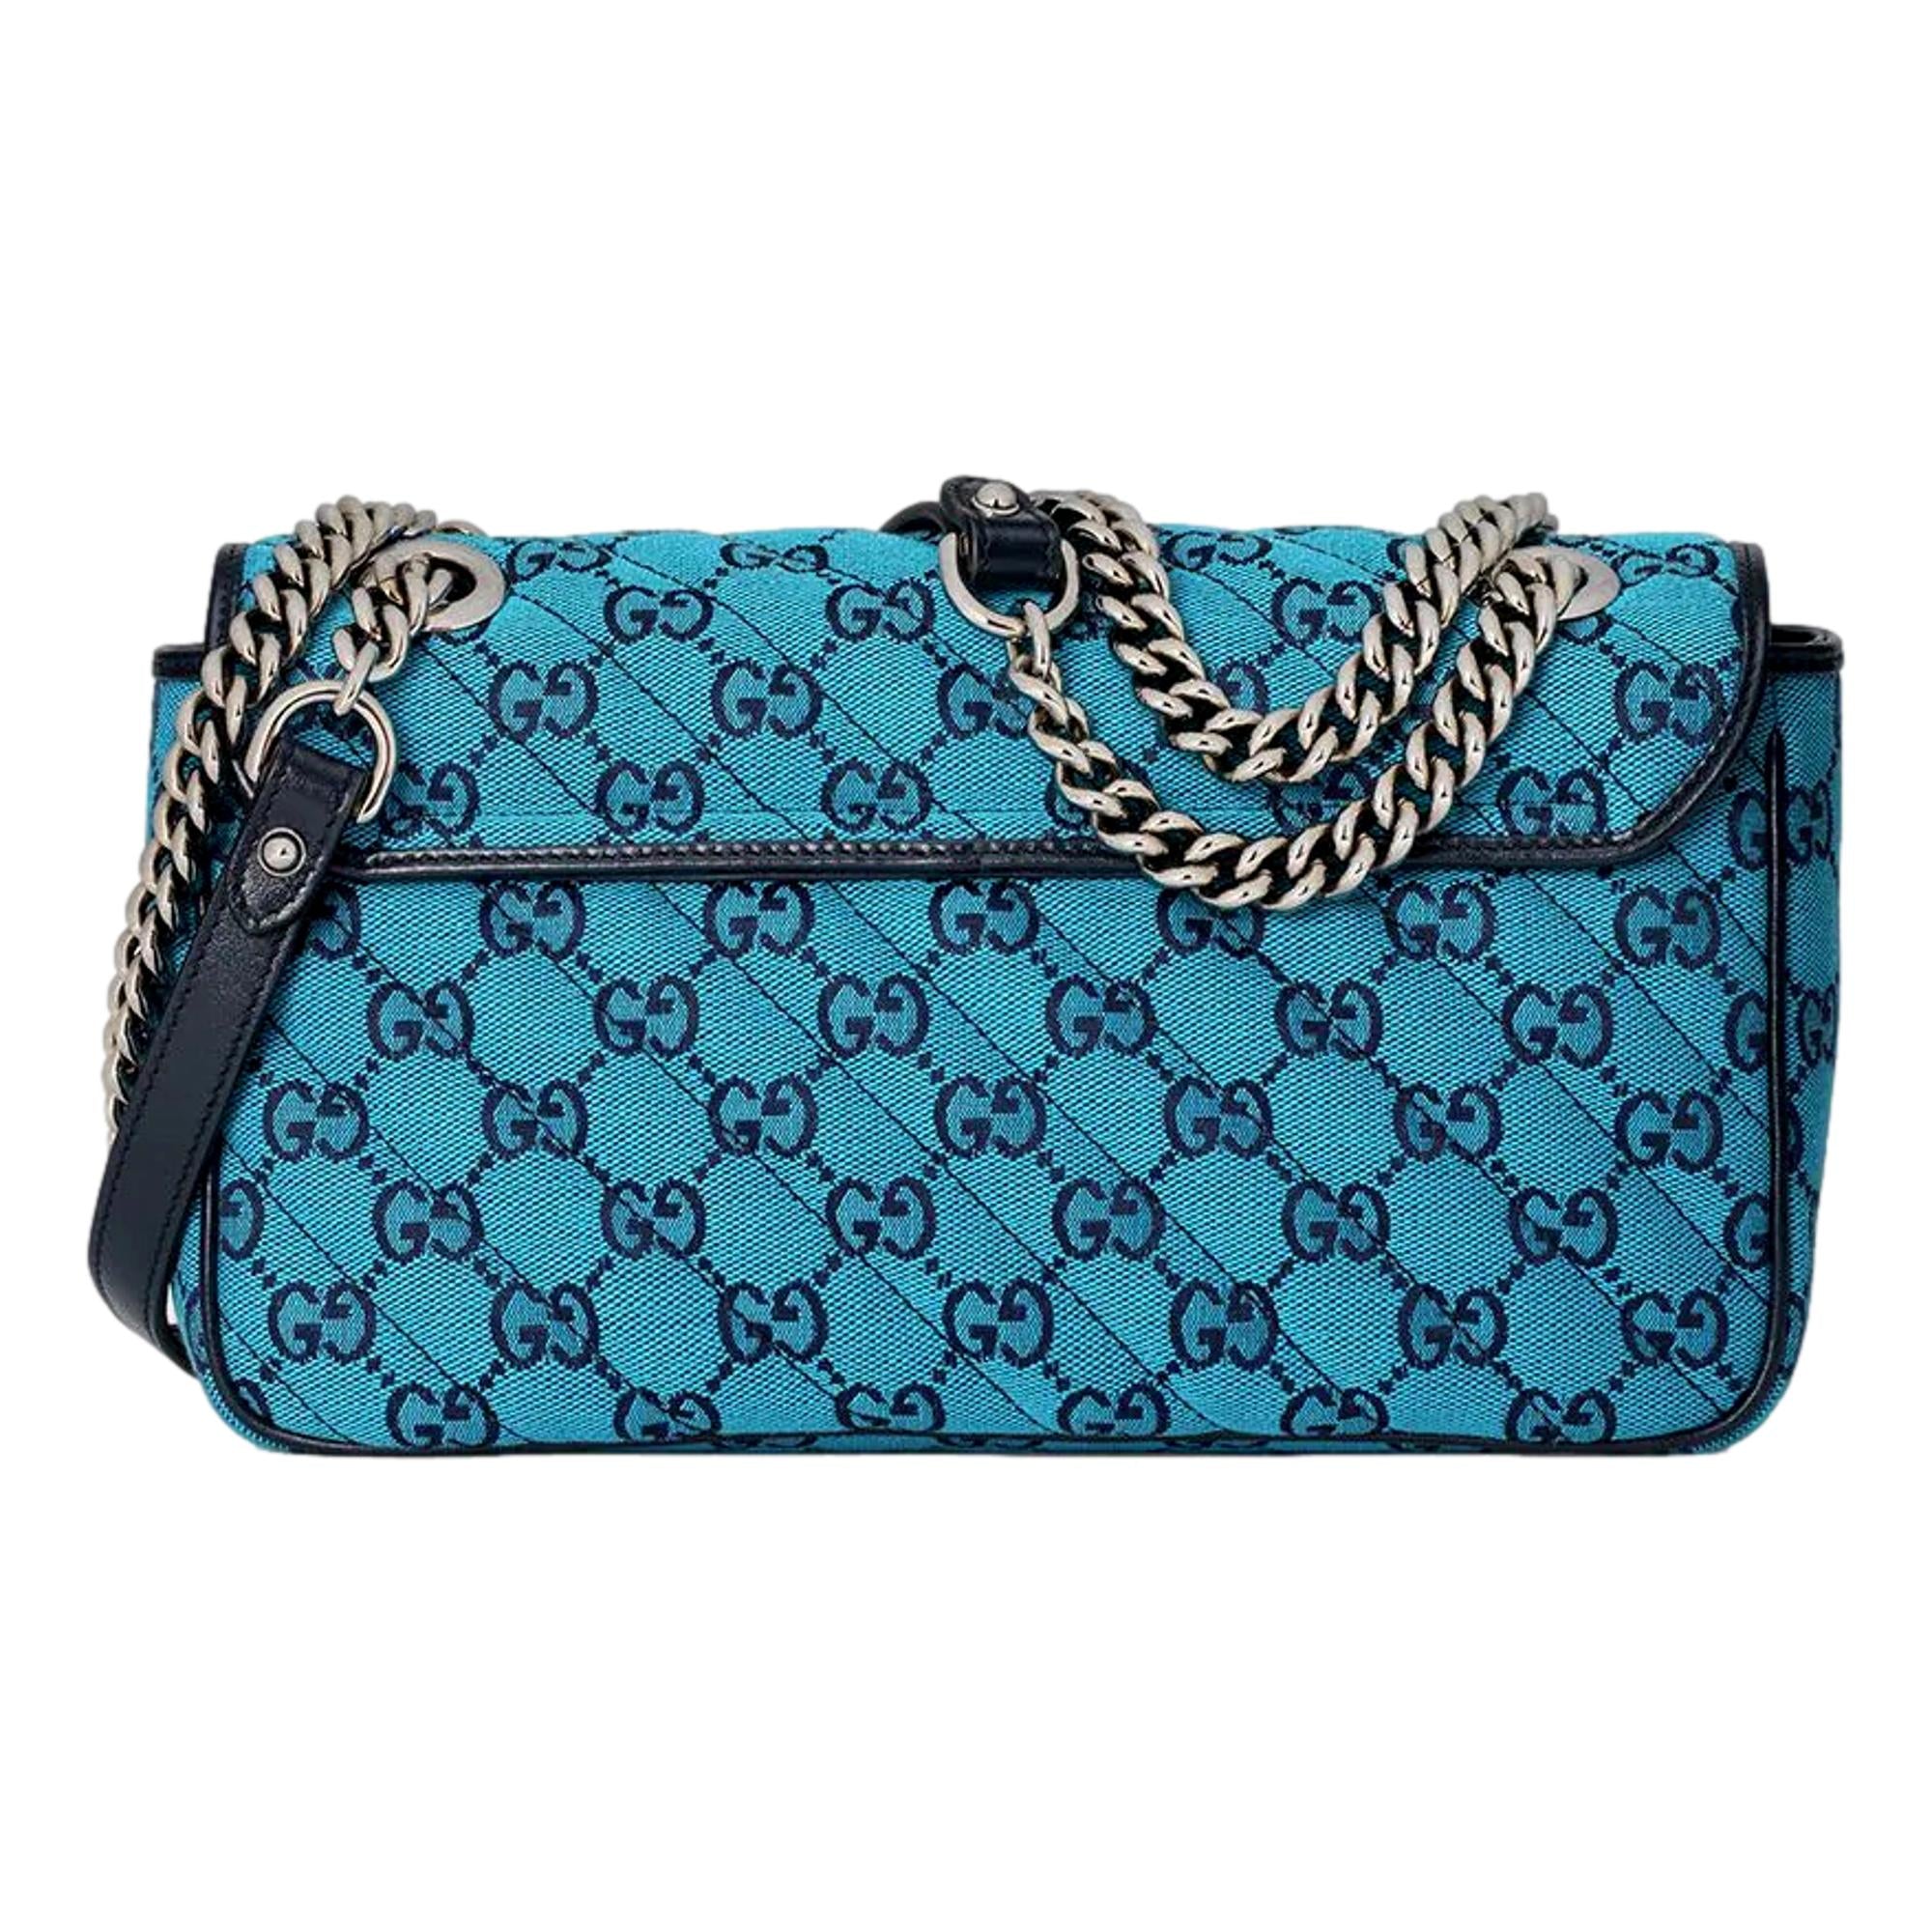 Gucci Flap Marmont Matelasse Blue Printed Canvas Shoulder Bag